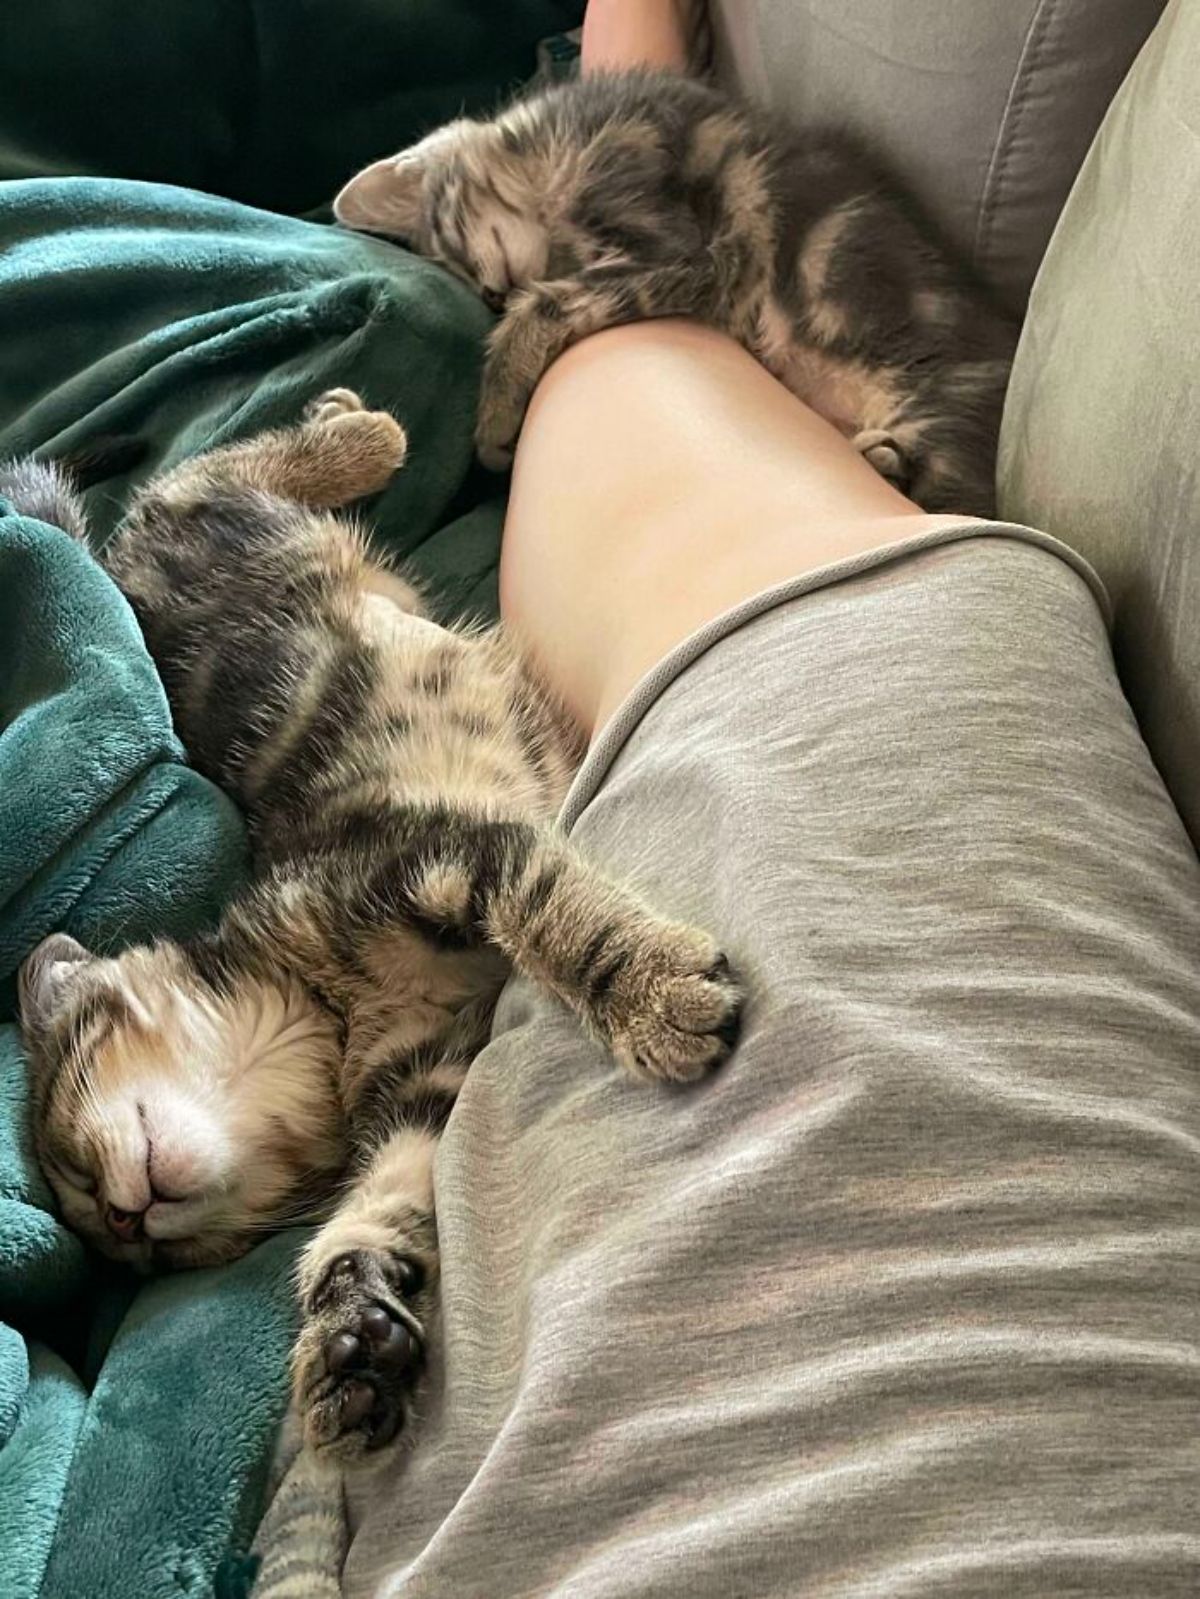 2 tabby kittens cuddling and sleeping against someone's leg